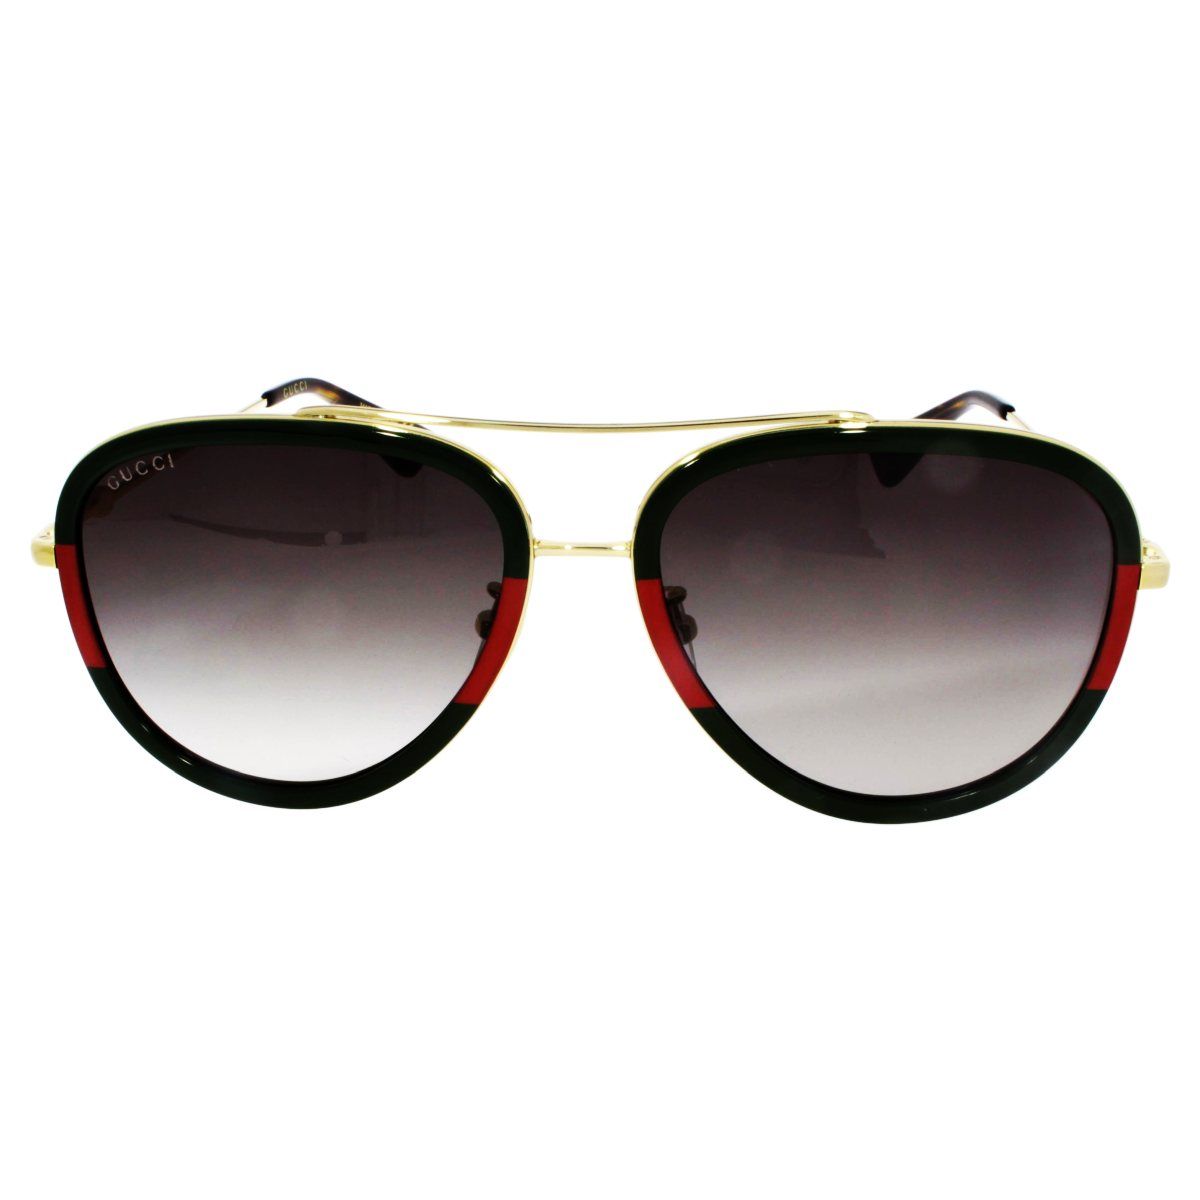 NEW Authentic Gucci Women Gold/Red Aviator Round Sunglasses 52mm $595Ret |  eBay